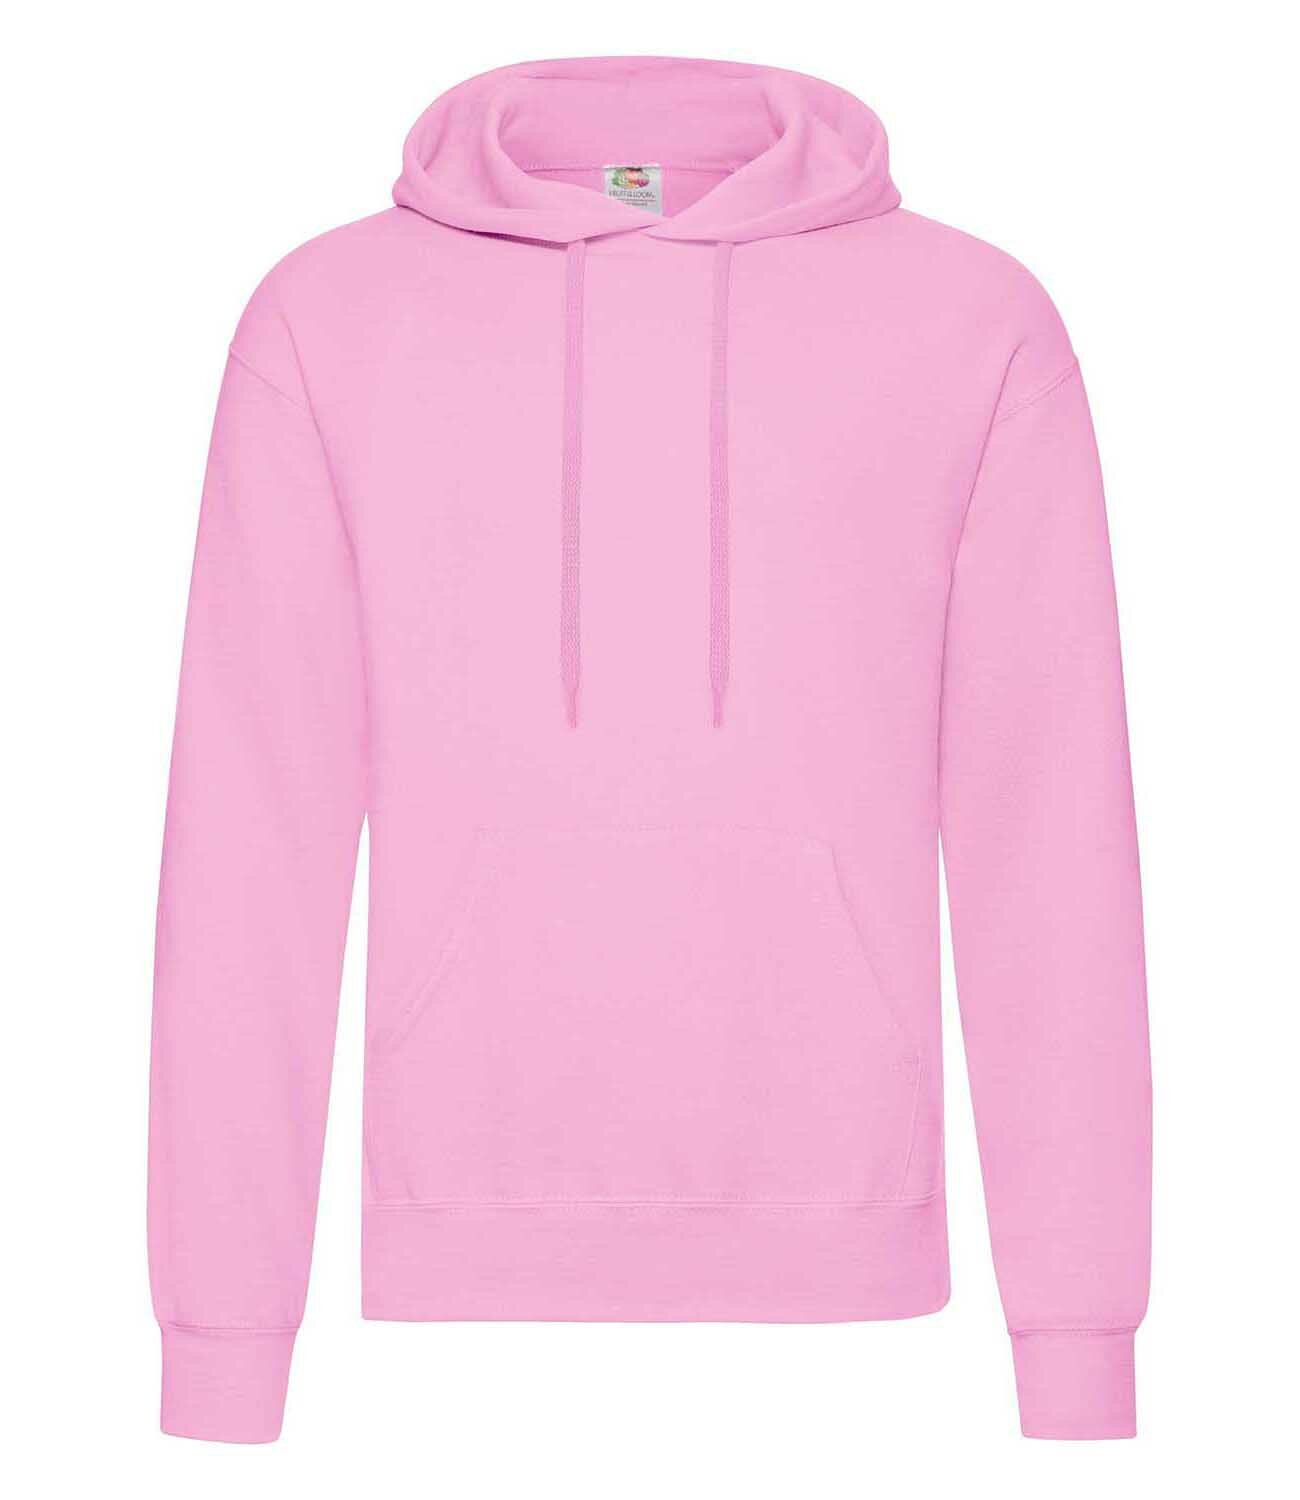 Pink sweatshirt